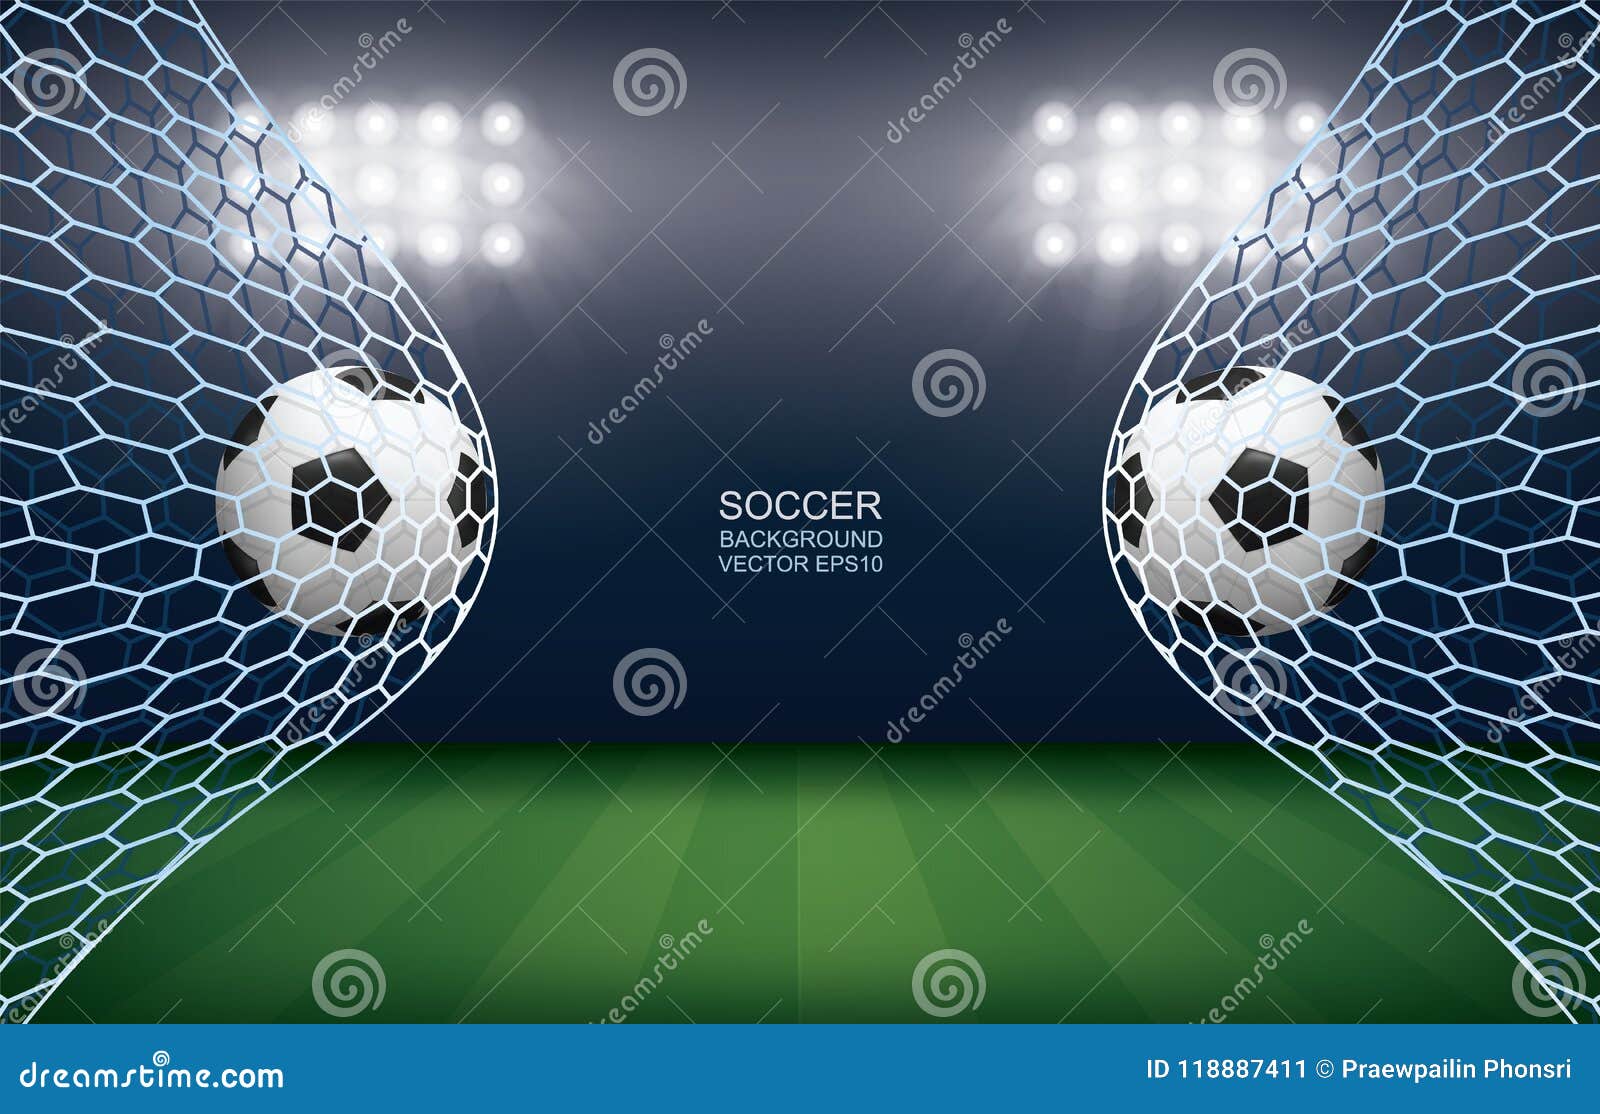 Soccer Football Ball In Soccer Goal With Soccer Field Stadium Background Stock Vector Illustration Of Football Leisure